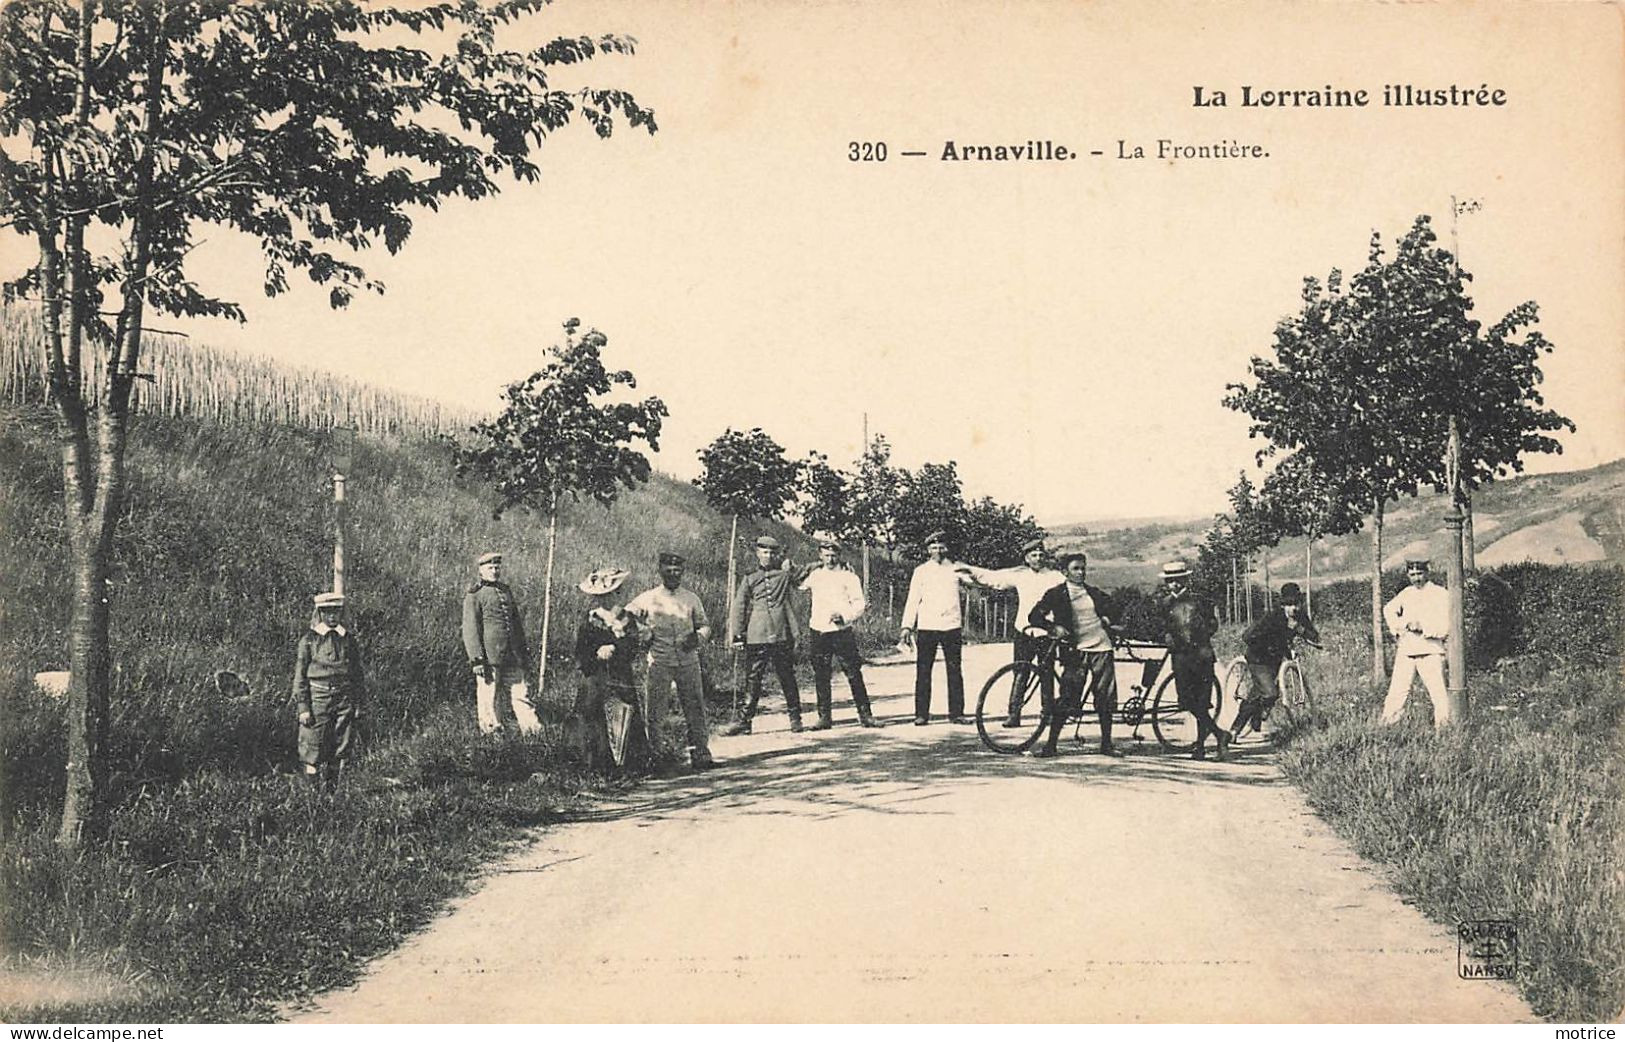 ARNAVILLE - La Frontière, Douane. - Customs